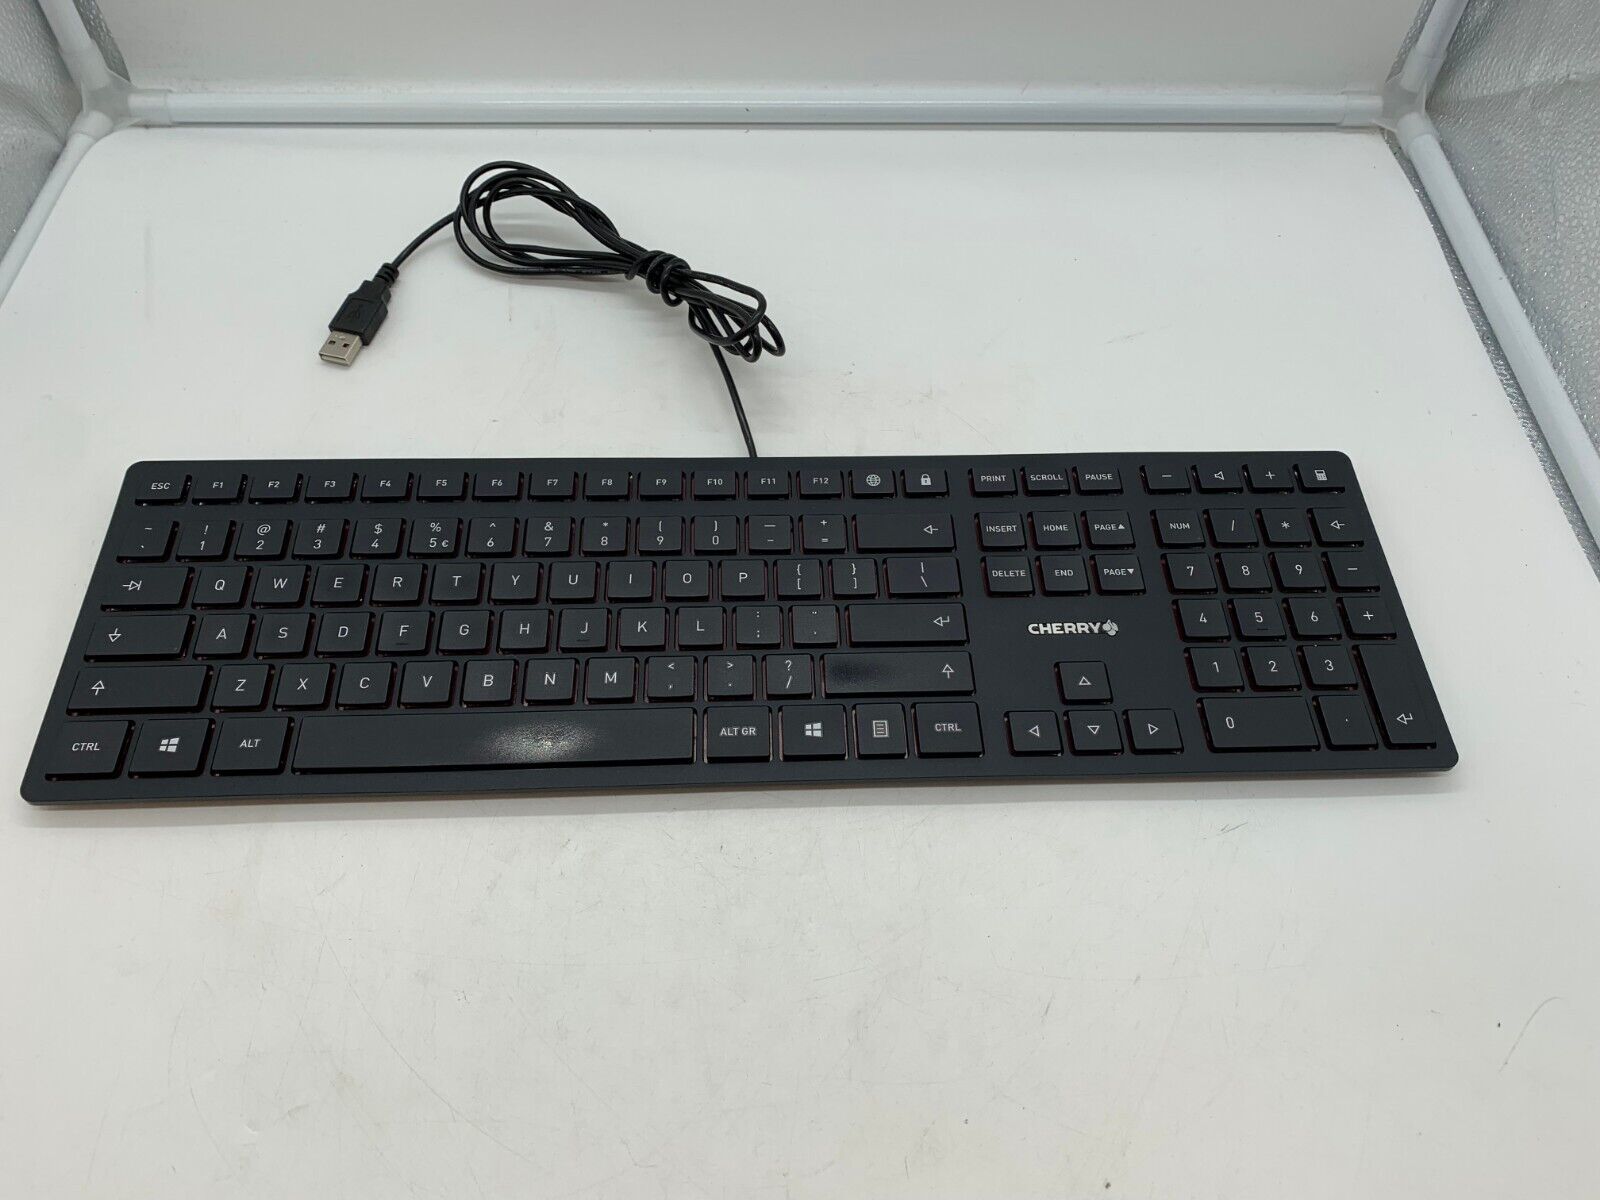 Genuine Cherry KC 6000 Slim wired Keyboard JK-16 with 